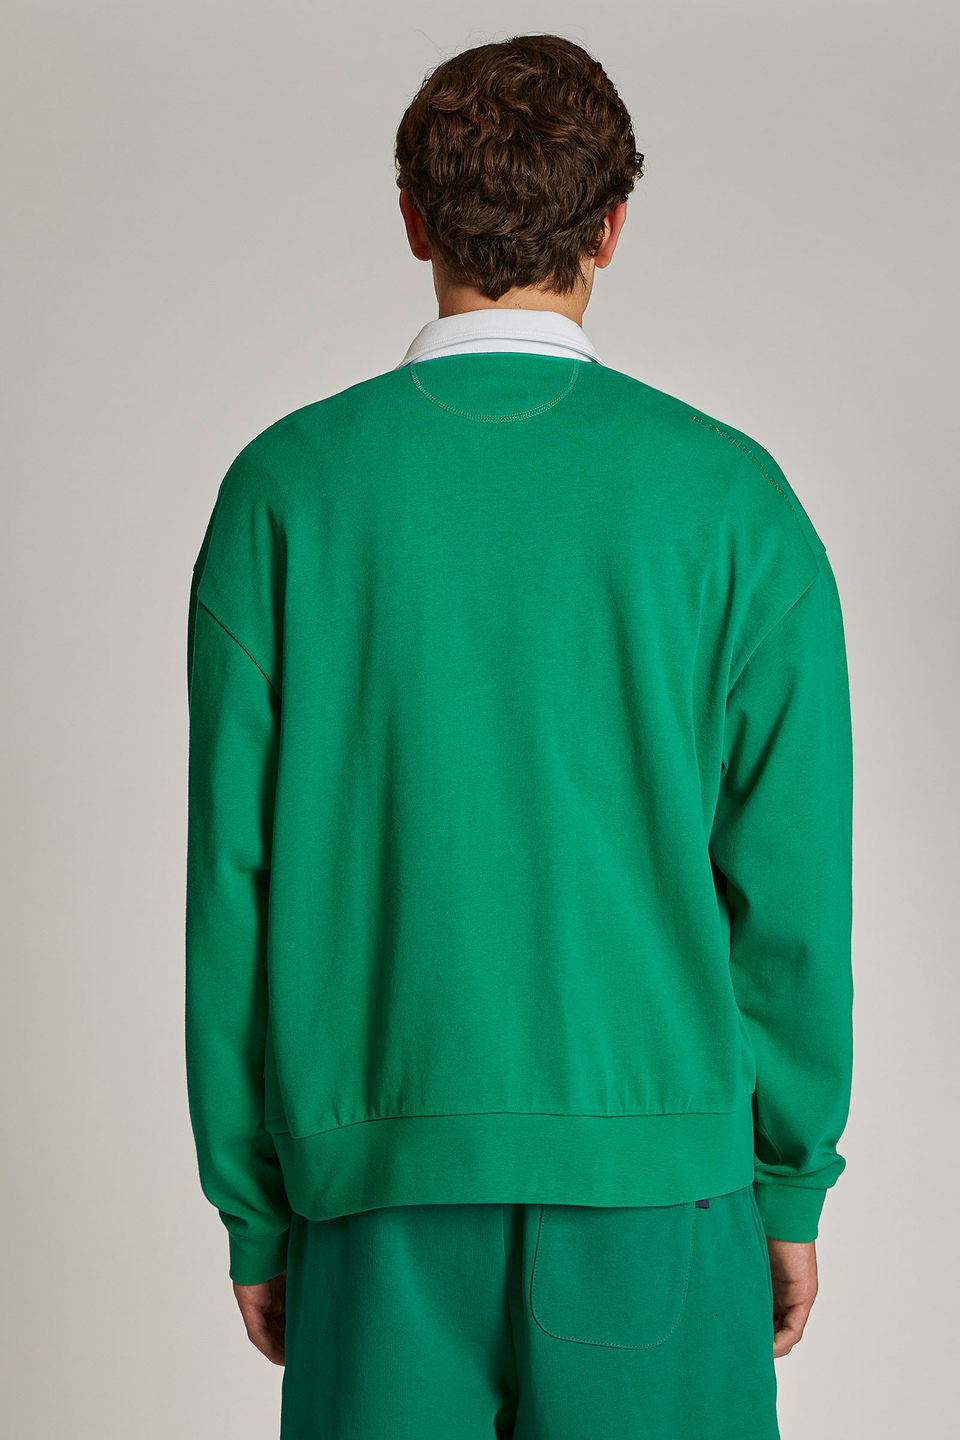 Men's oversized 100% cotton sweatshirt featuring a contrasting collar | La Martina - Official Online Shop